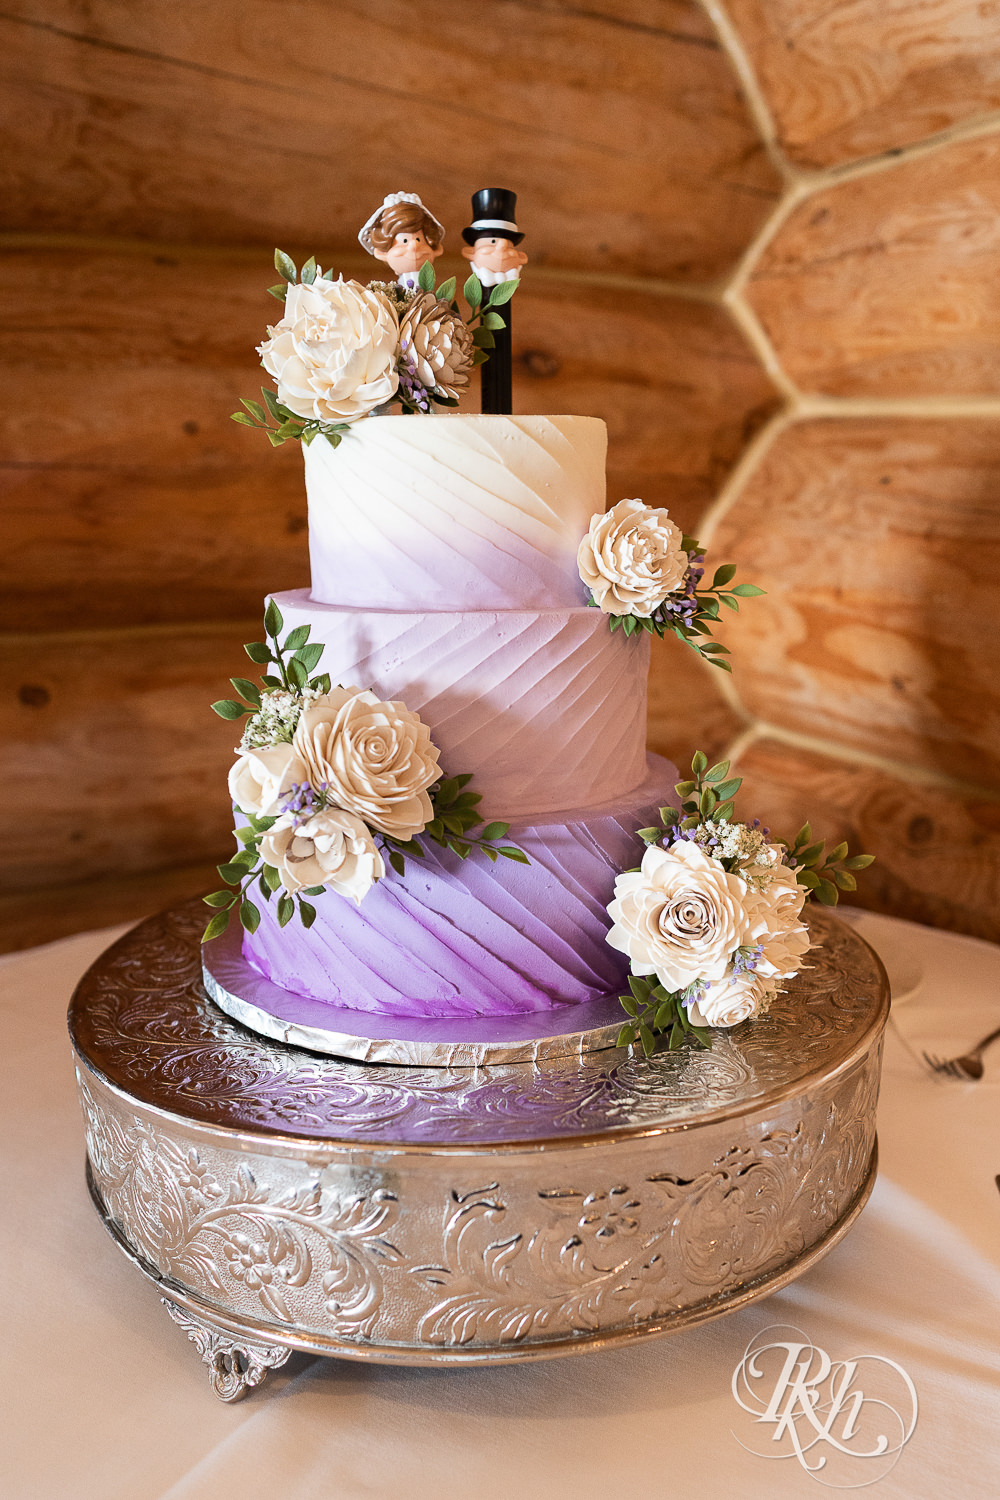 Purple ombre wedding cake for winter wedding at Glenhaven Events in Farmington, Minnesota.